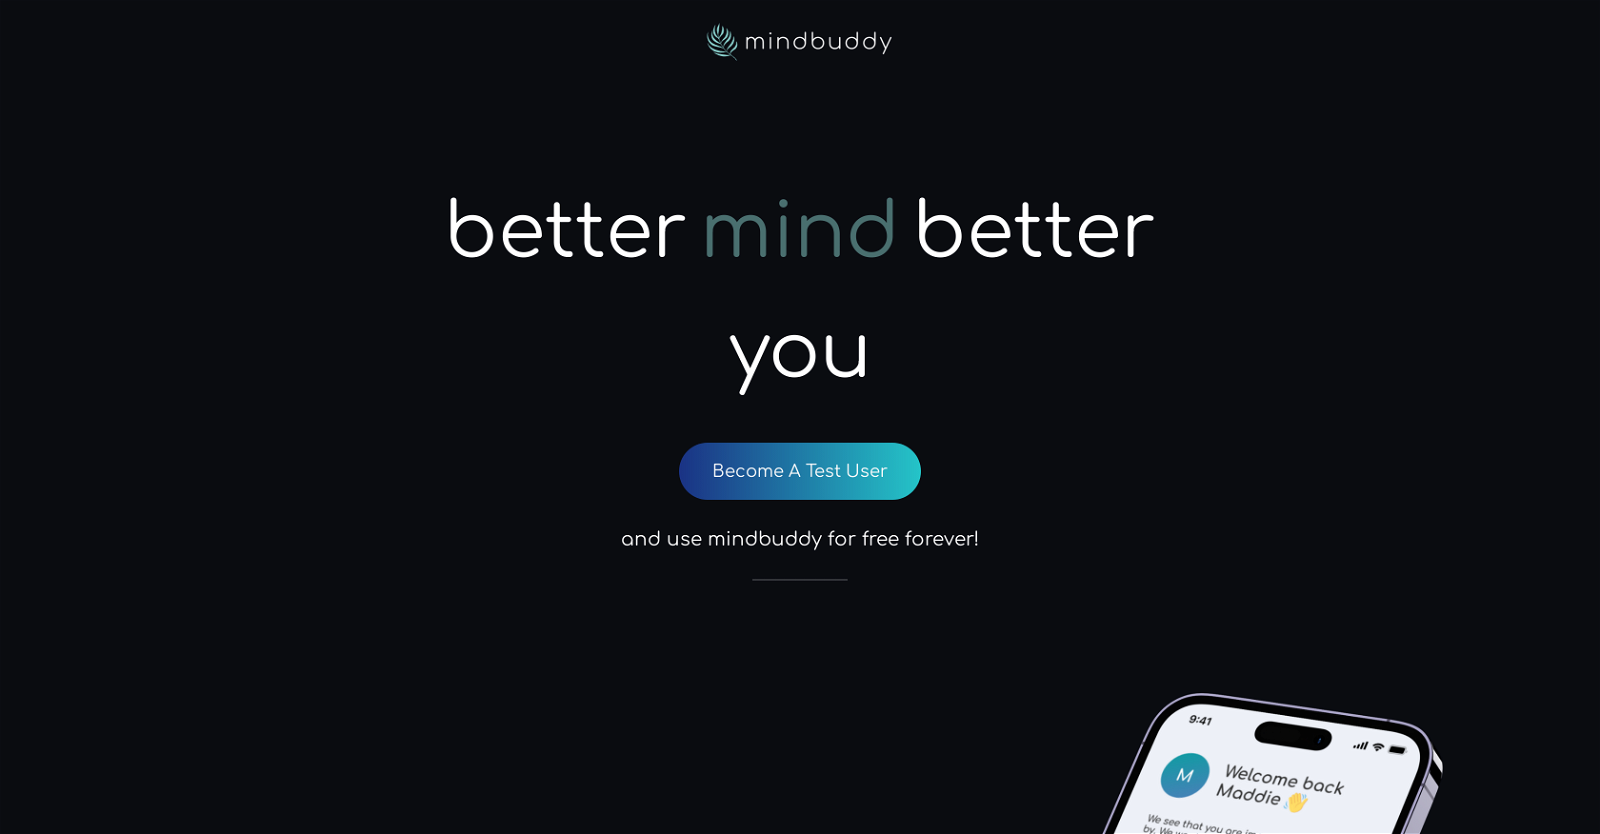 Mindbuddy website